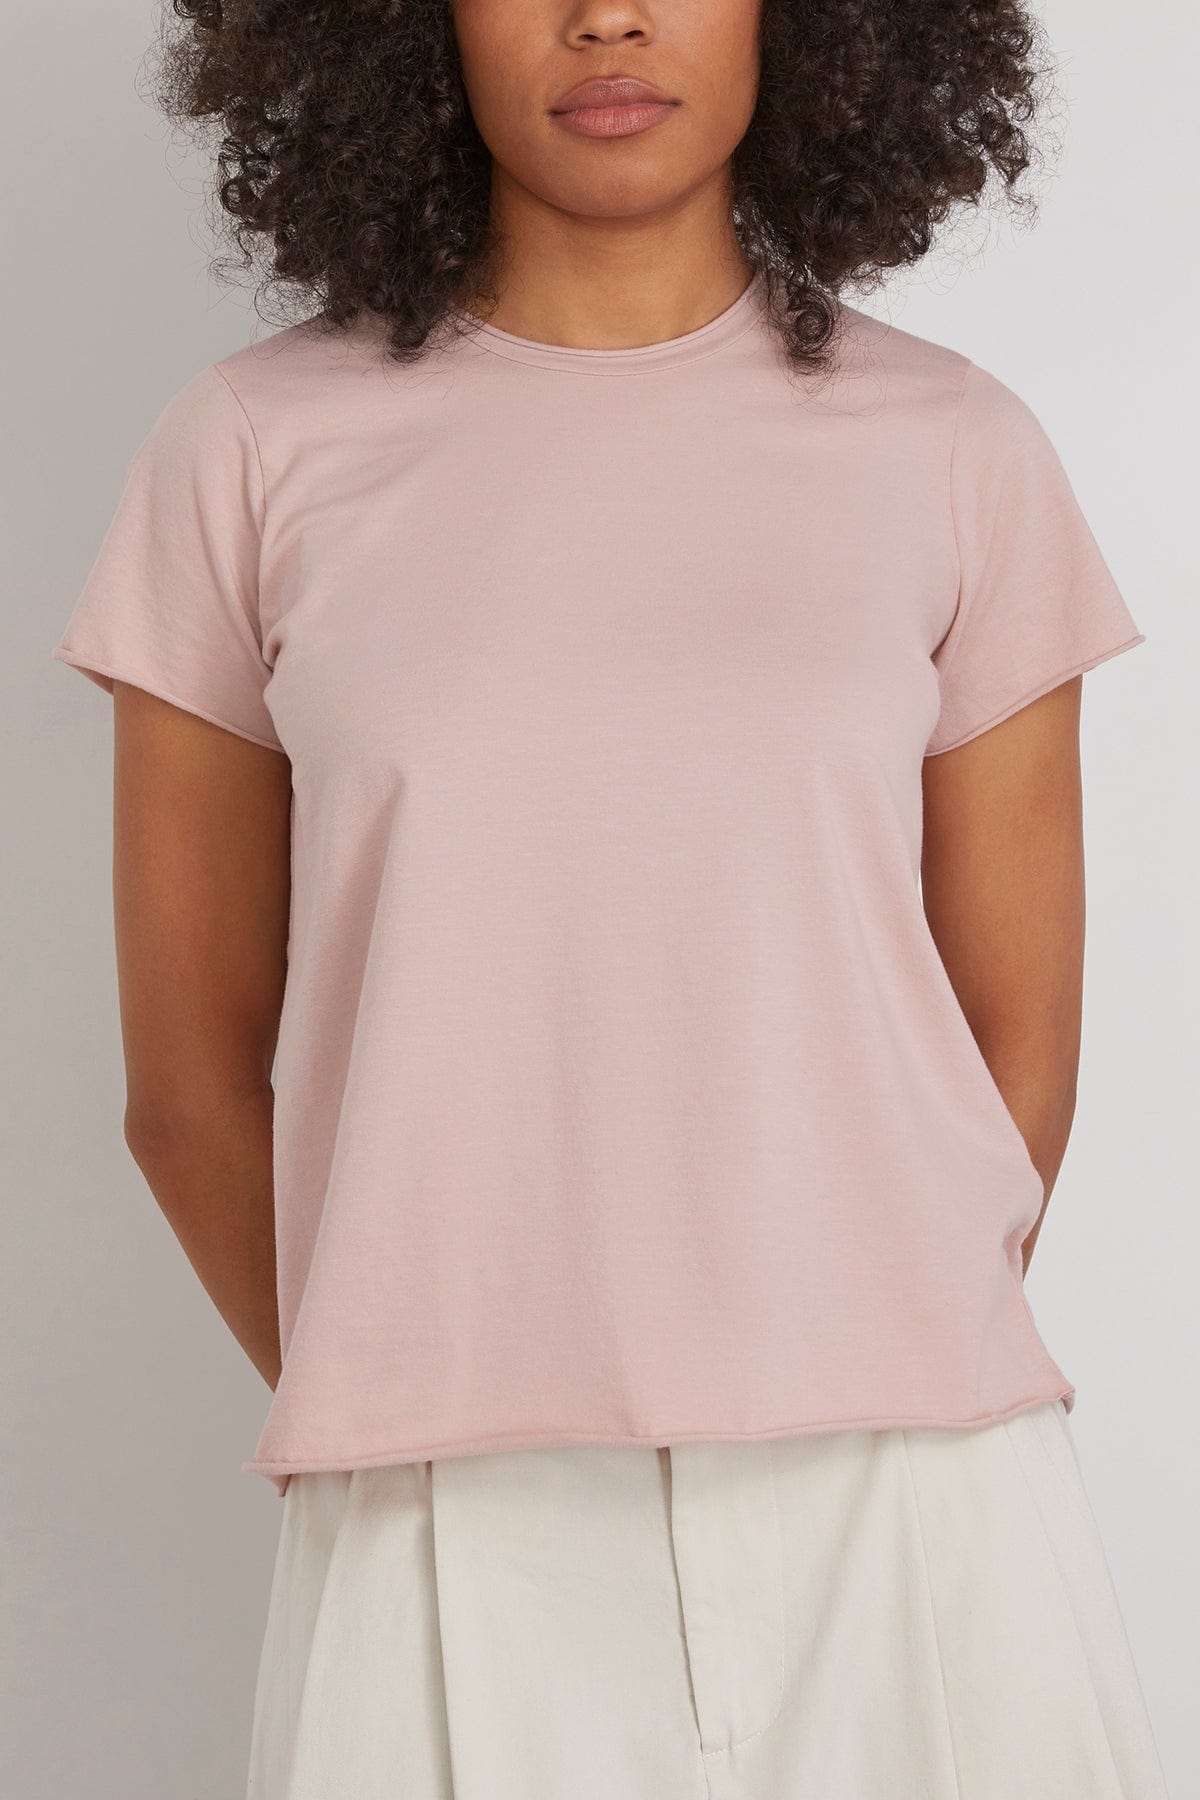 Labo.Art Tops Maglia Rico T-Shirt in Rose Gray Labo.Art Maglia Rico T-Shirt in Rose Gray